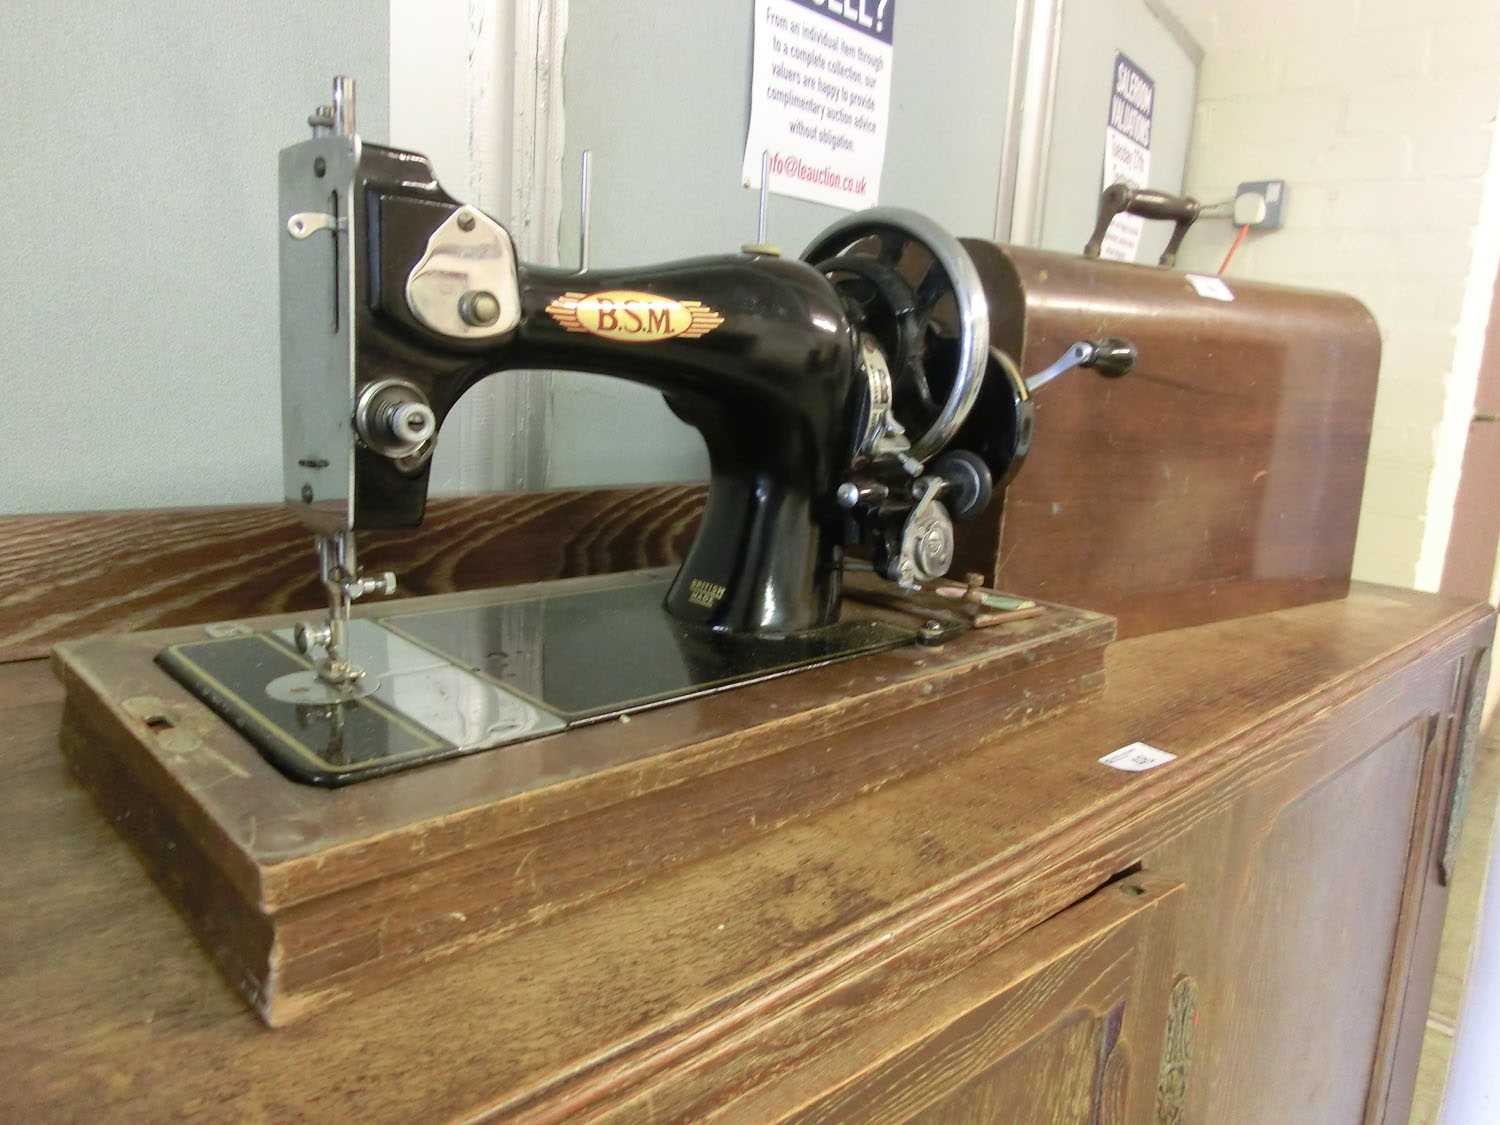 A cased BSM manual sewing machine